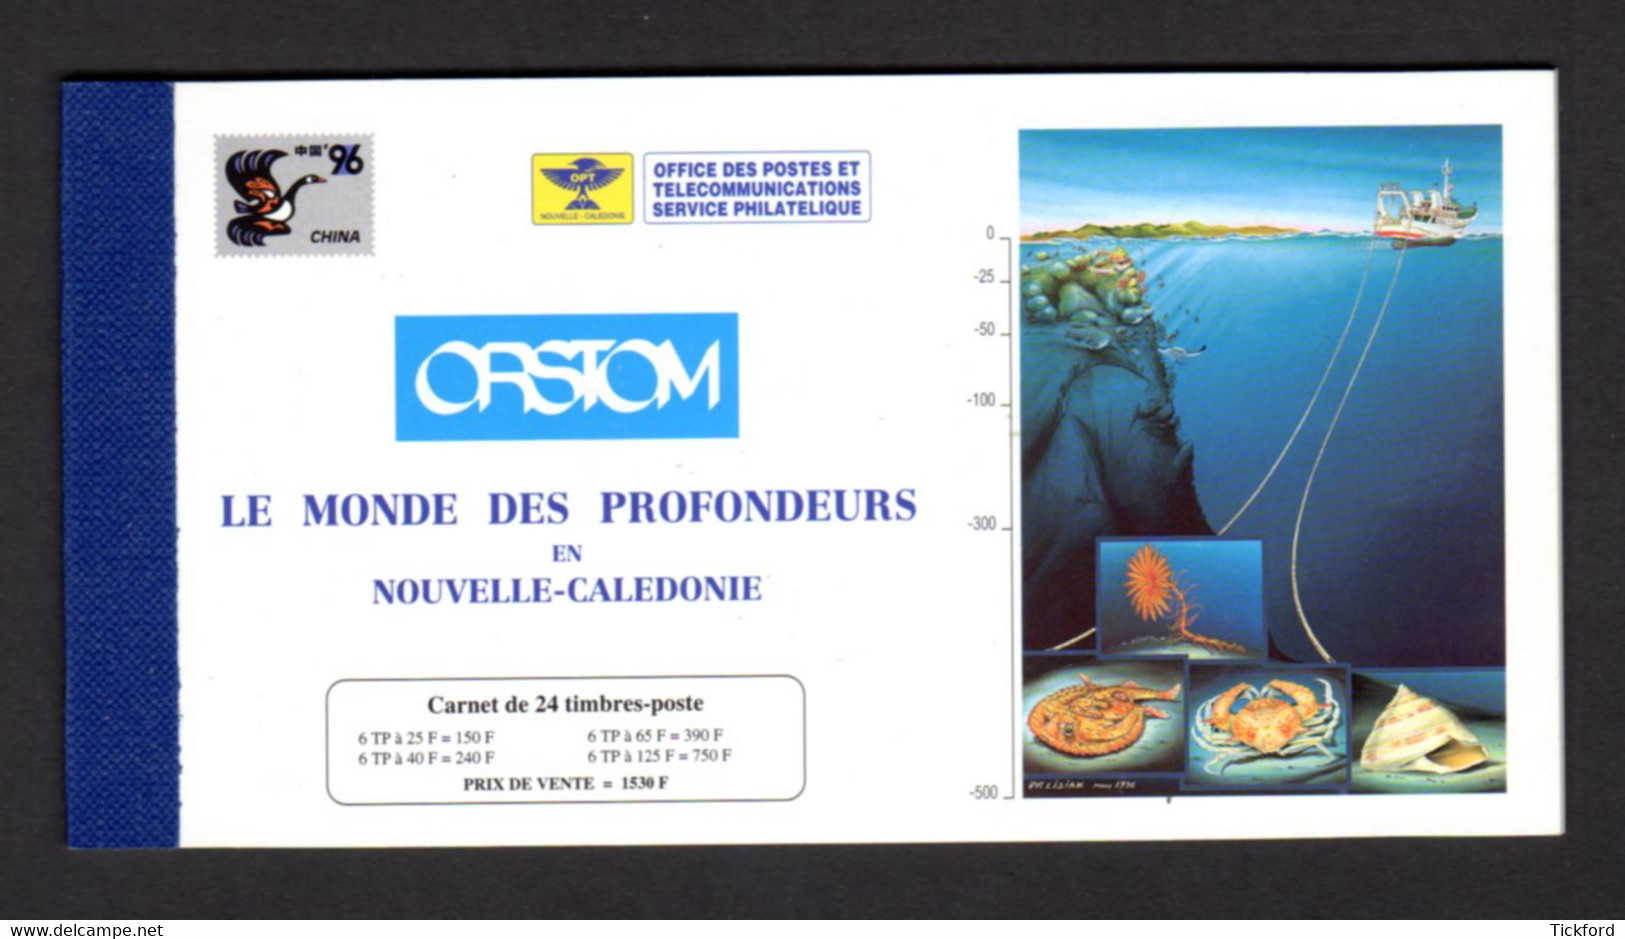 NOUVELLE CALEDONIE 1996 - Yvert N° C710 - Neuf ** / MNH - Orstom, Le Monde Des Profondeurs - Booklets